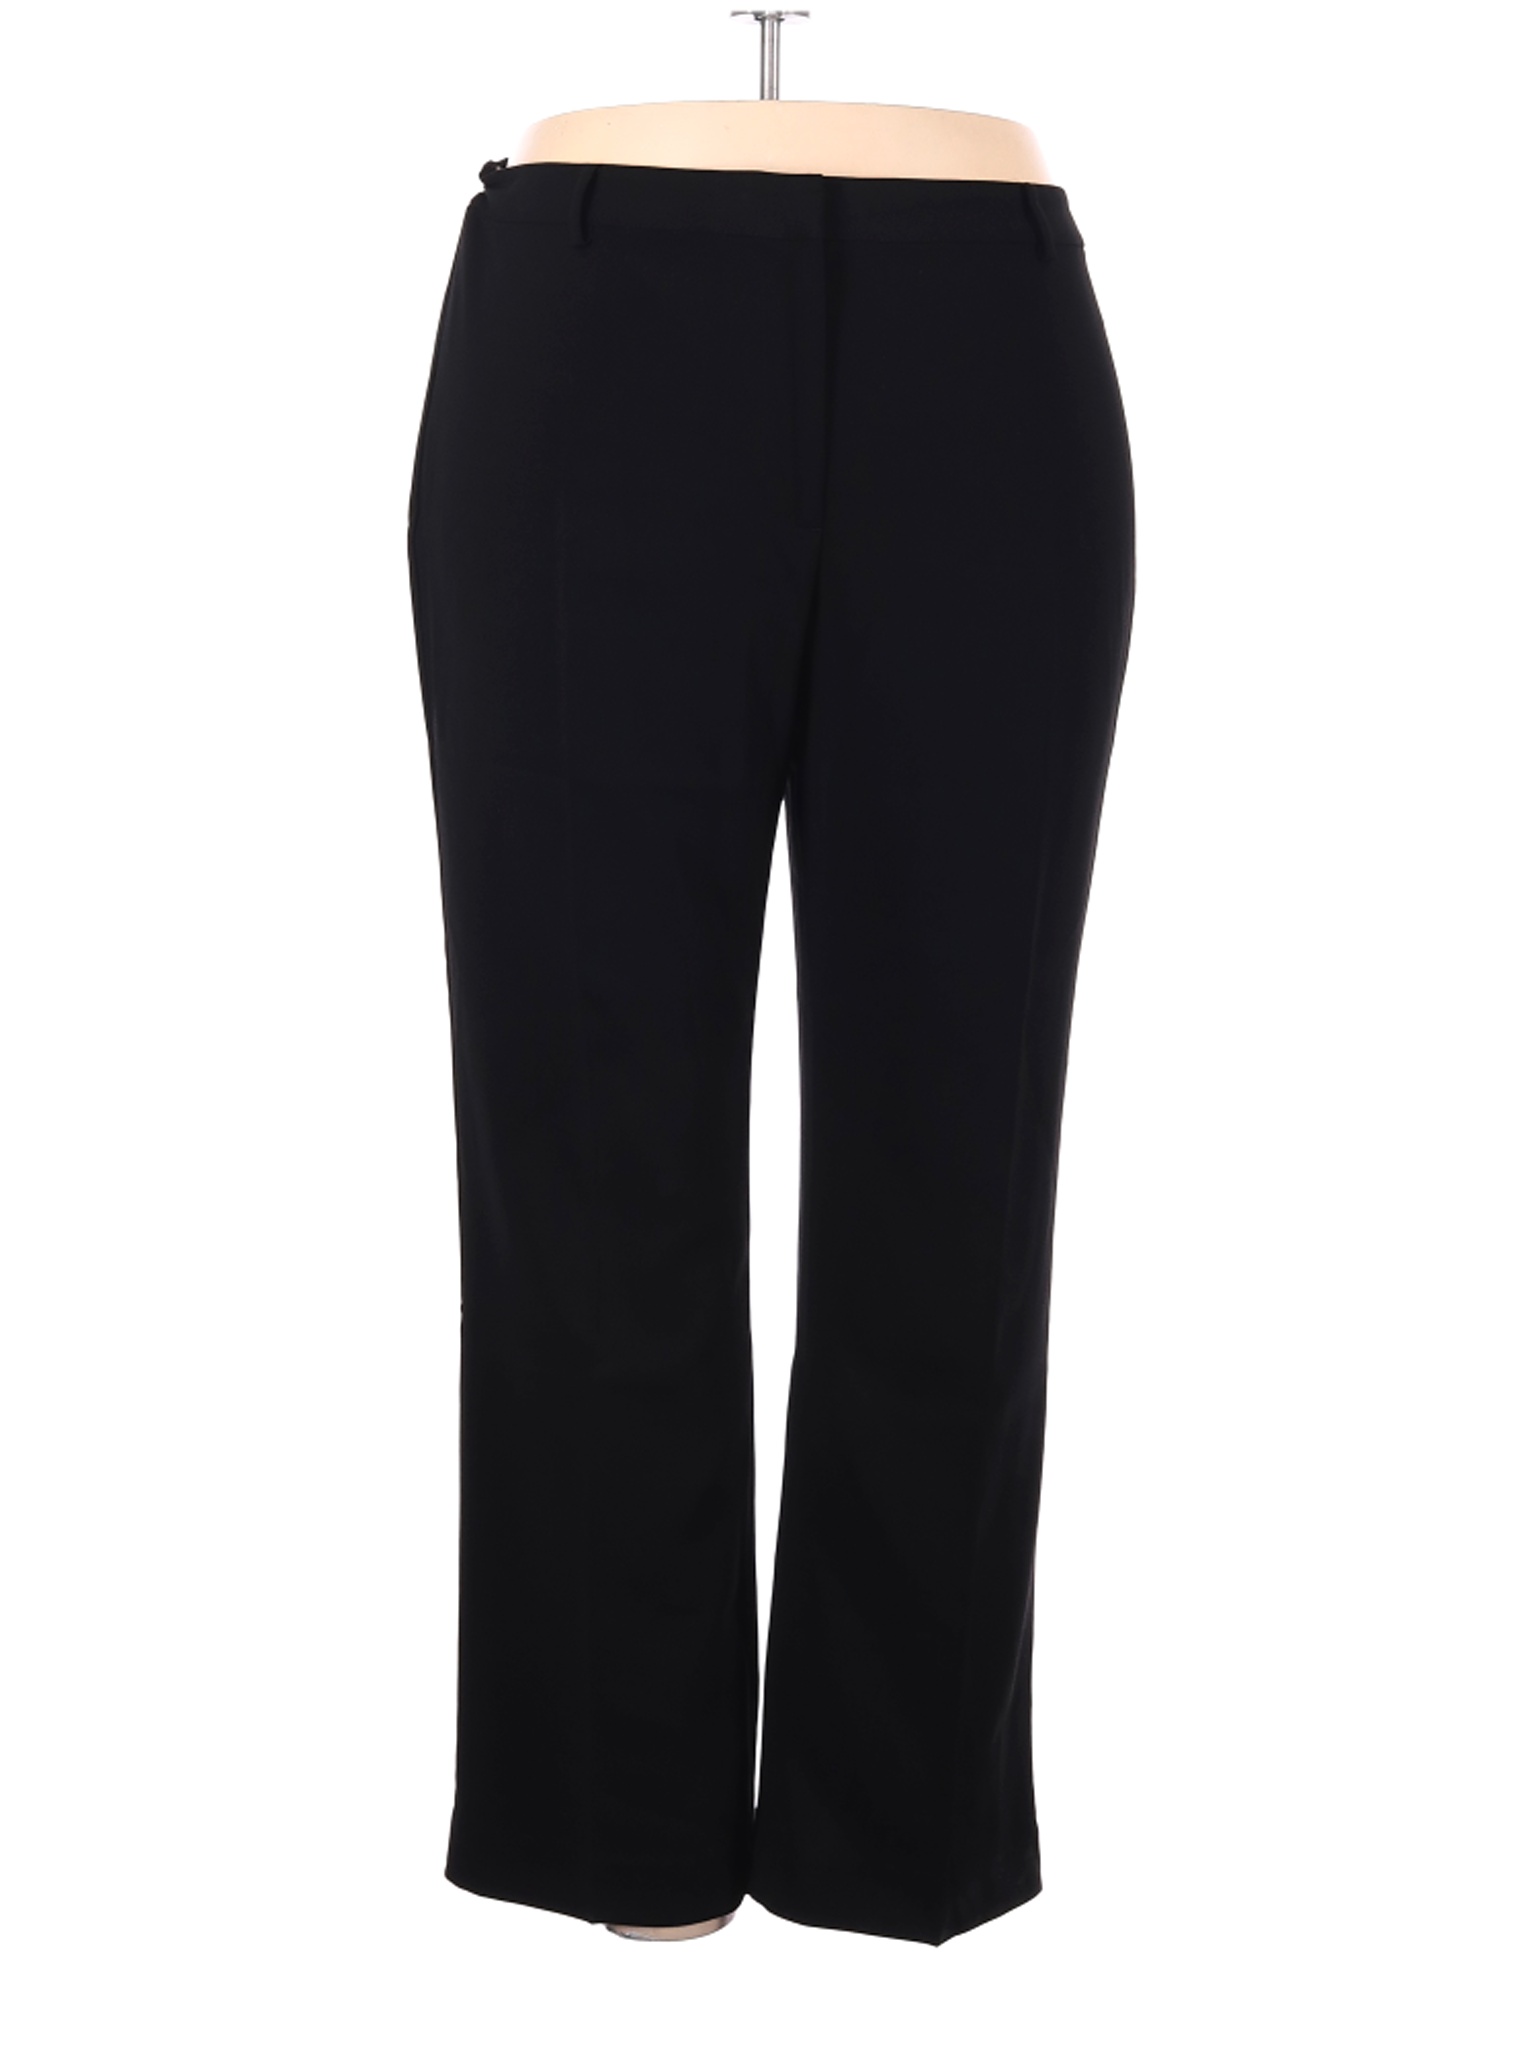 Talbots Women Black Dress Pants 18 Plus | eBay